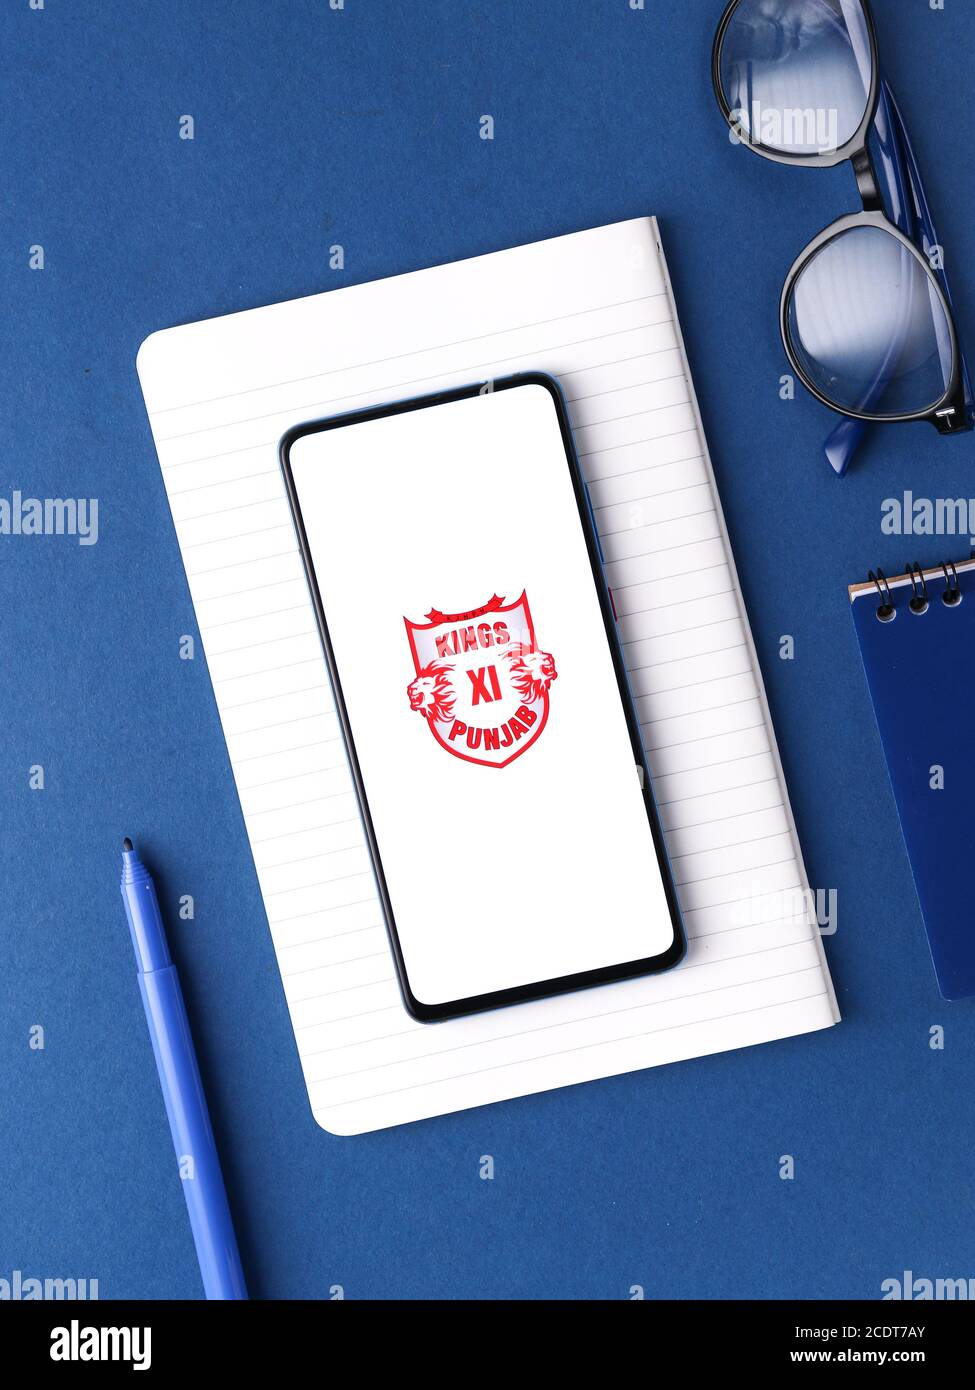 Assam, india - August 27, 2020 : Kings XI punjab logo on phone screen stock image. Stock Photo